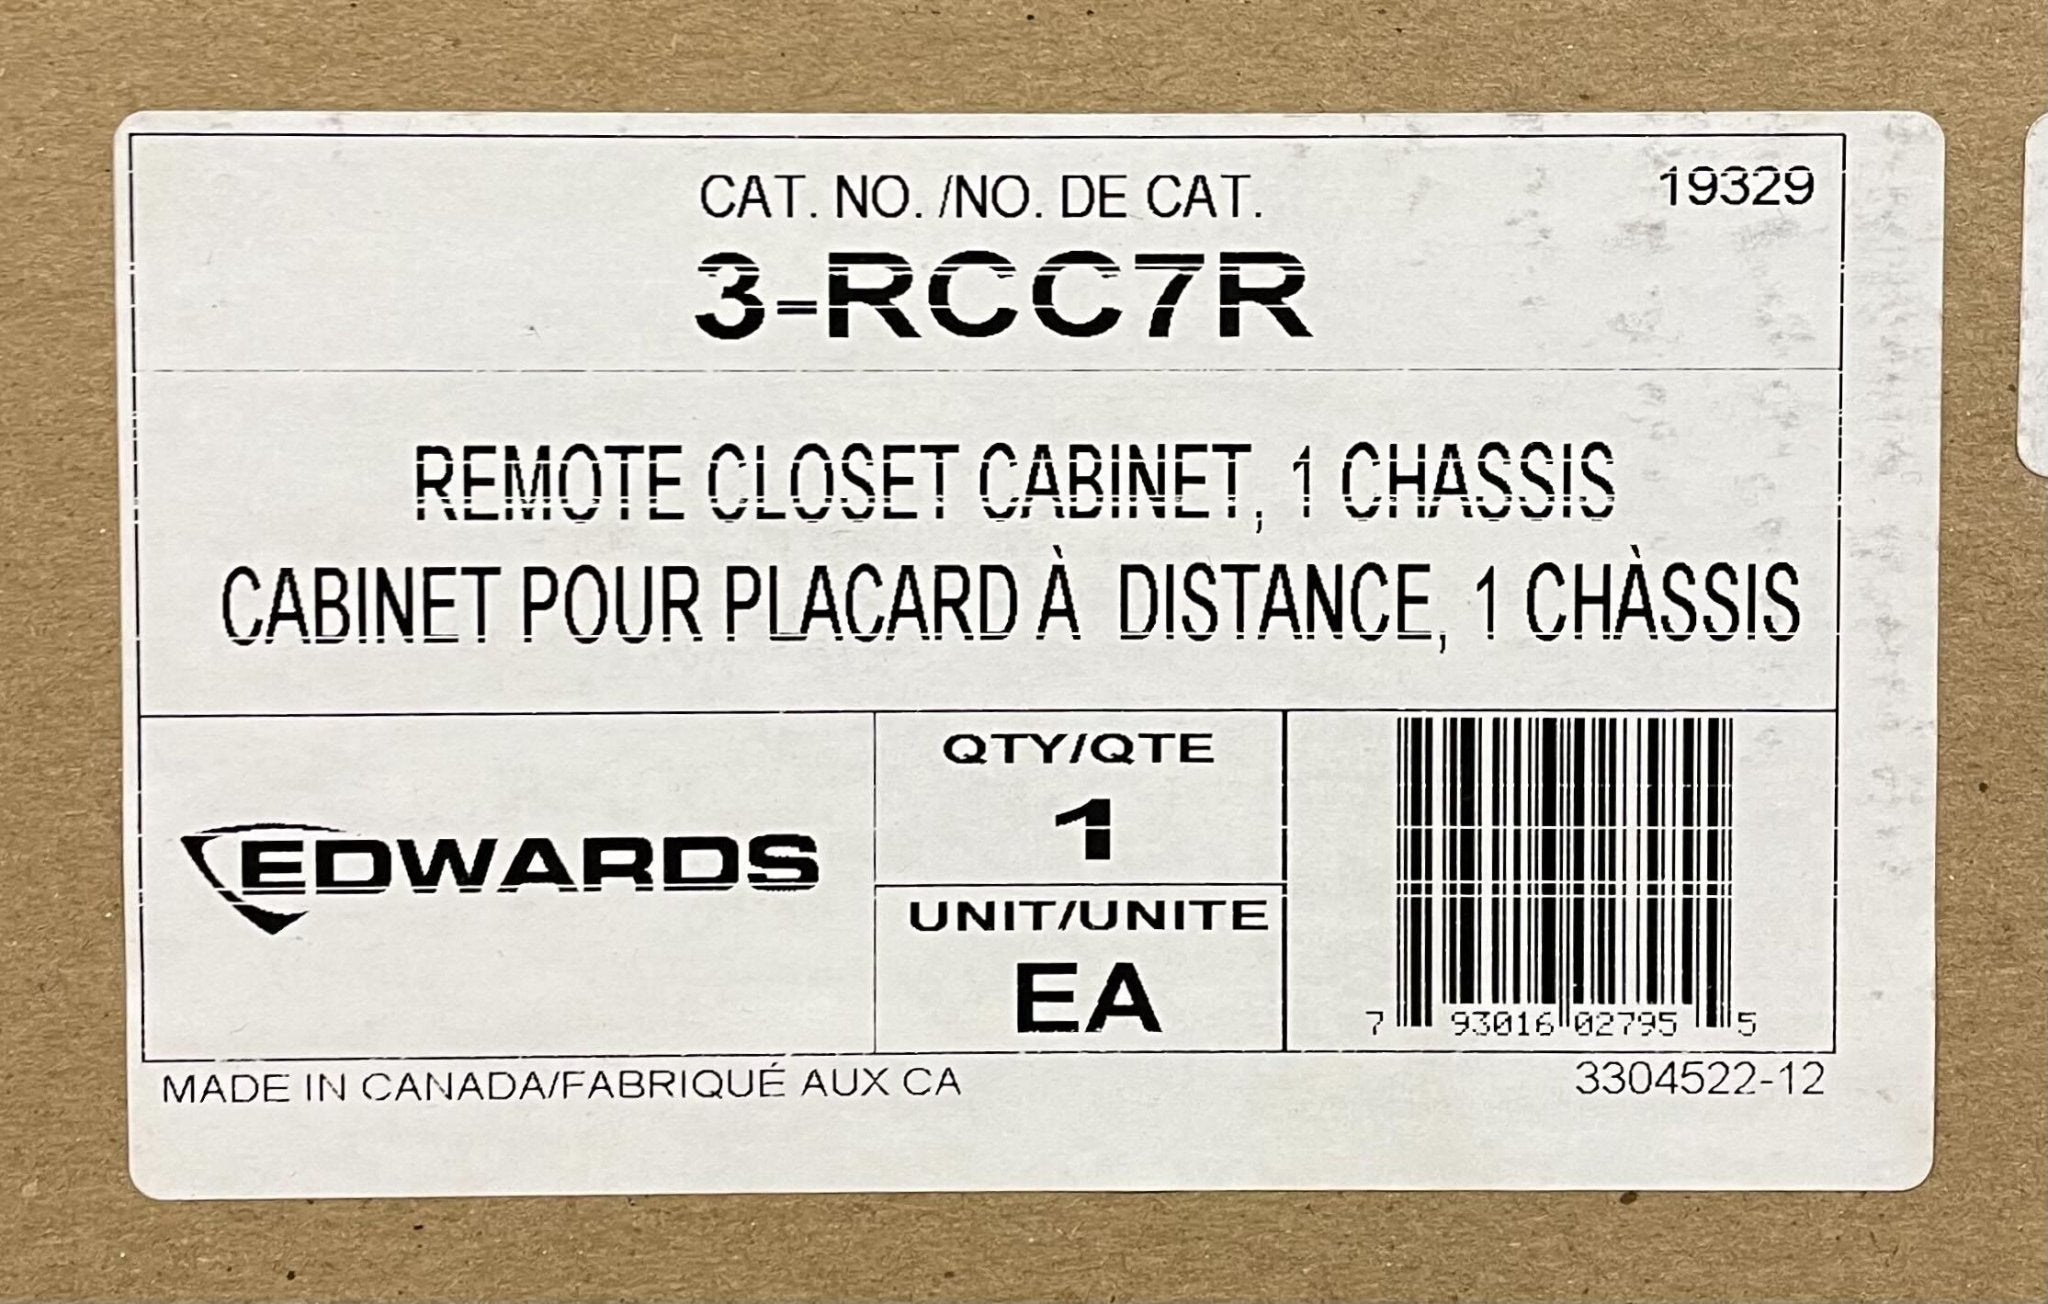 Edwards 3-RCC7R - The Fire Alarm Supplier